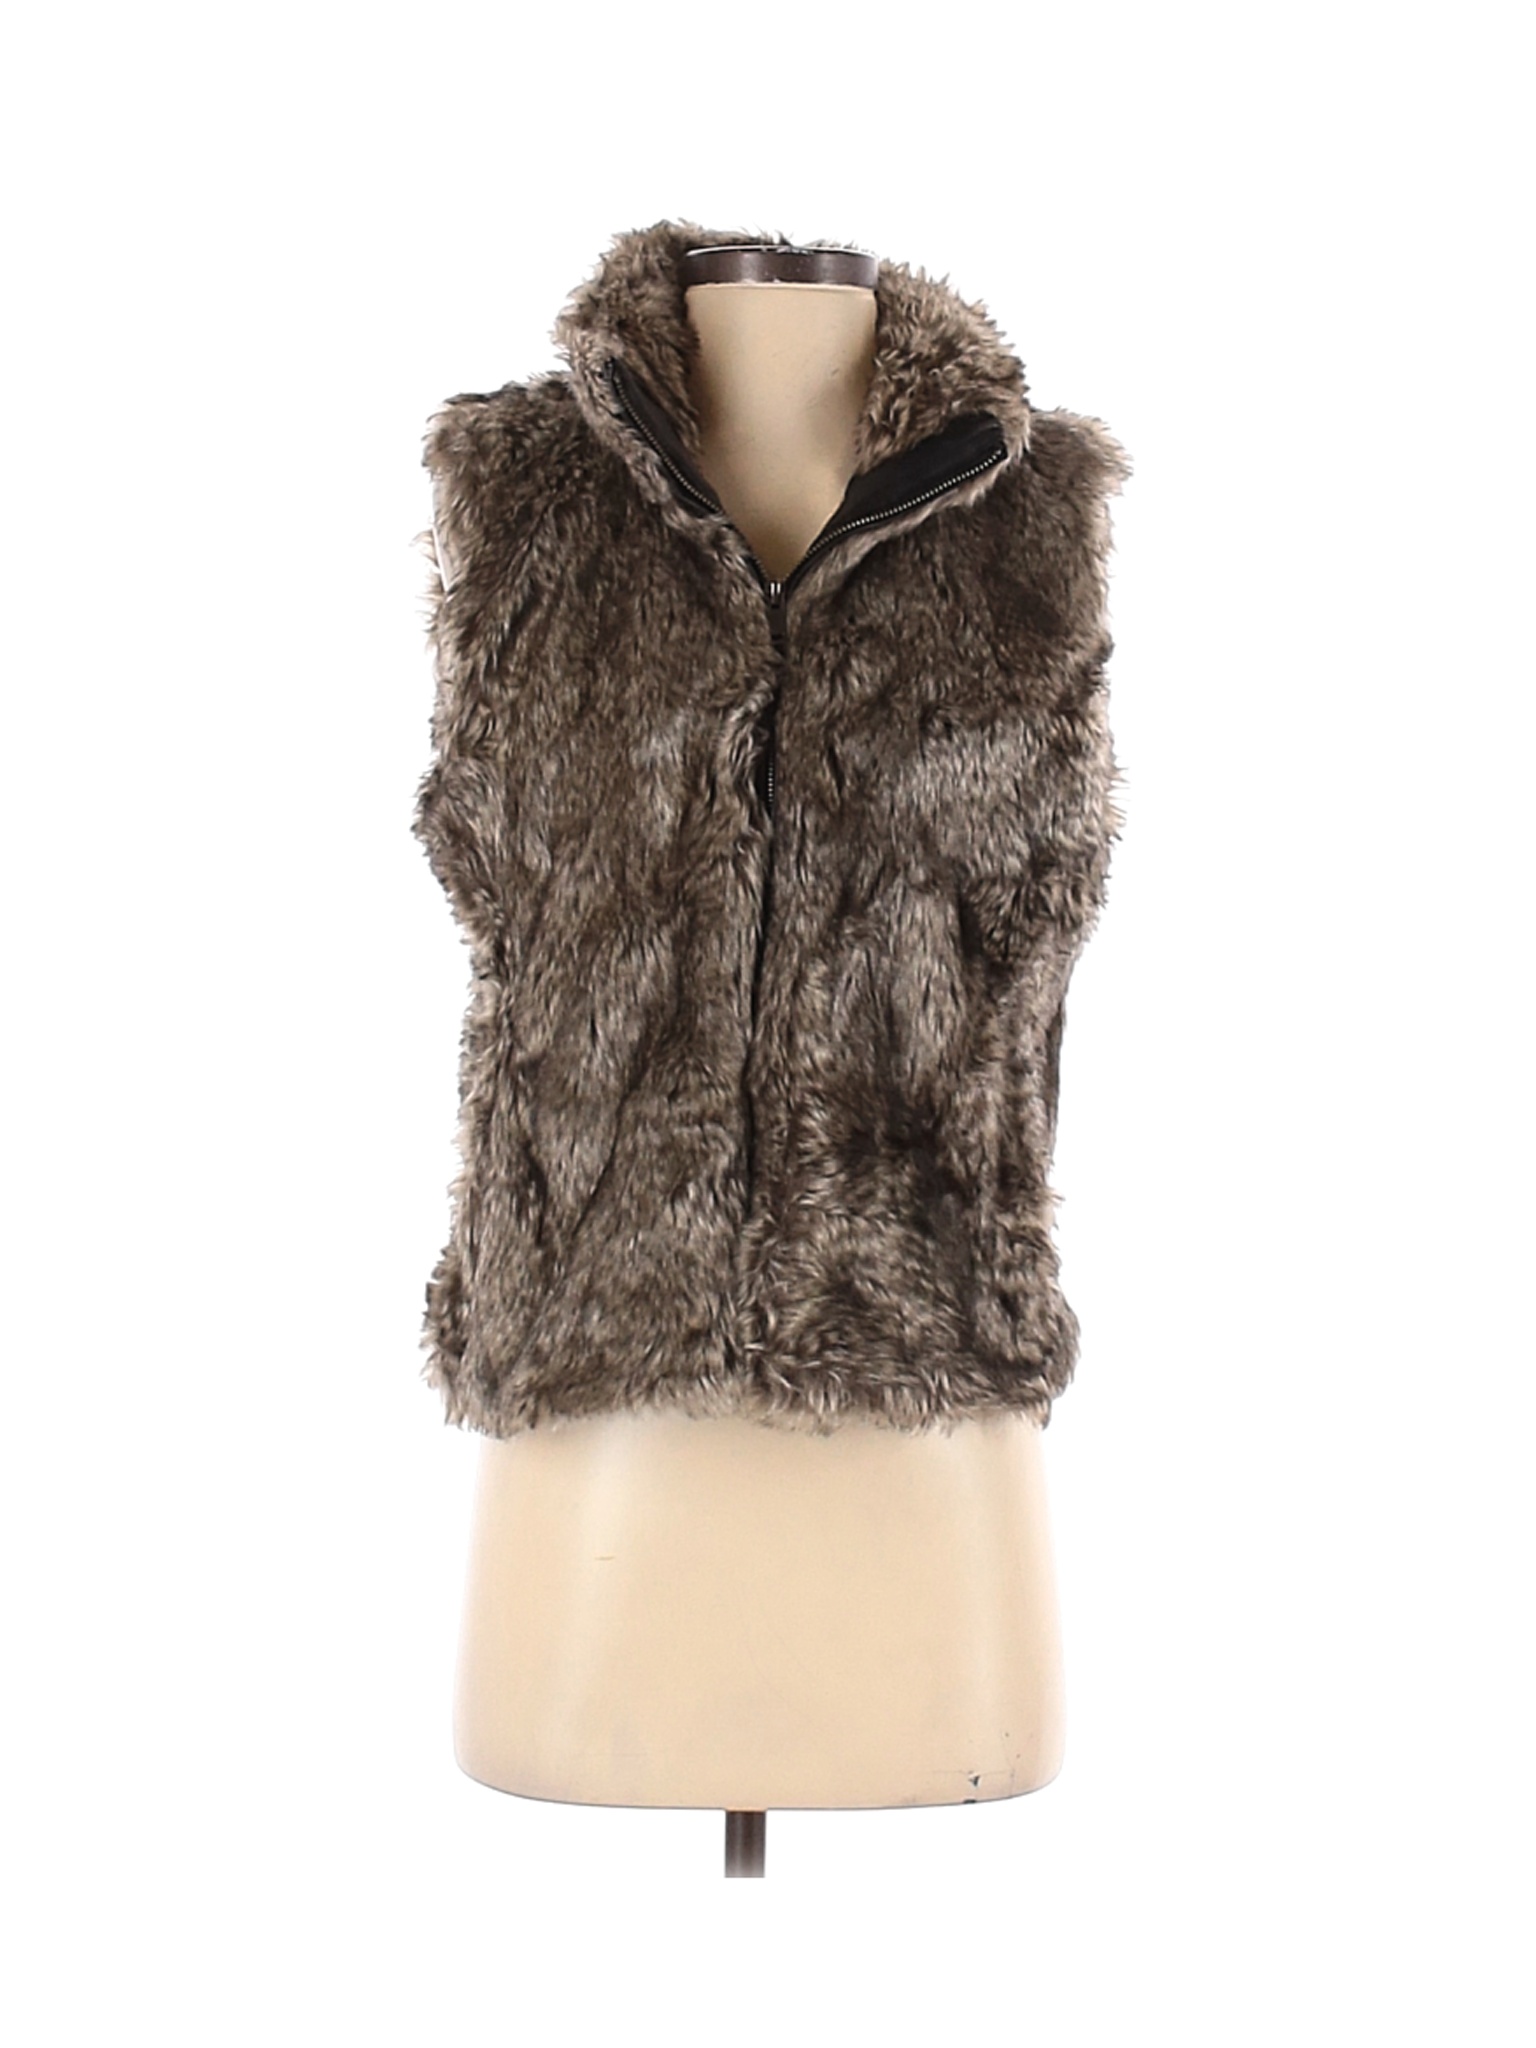 Banana Republic Women Brown Faux Fur Vest S | eBay